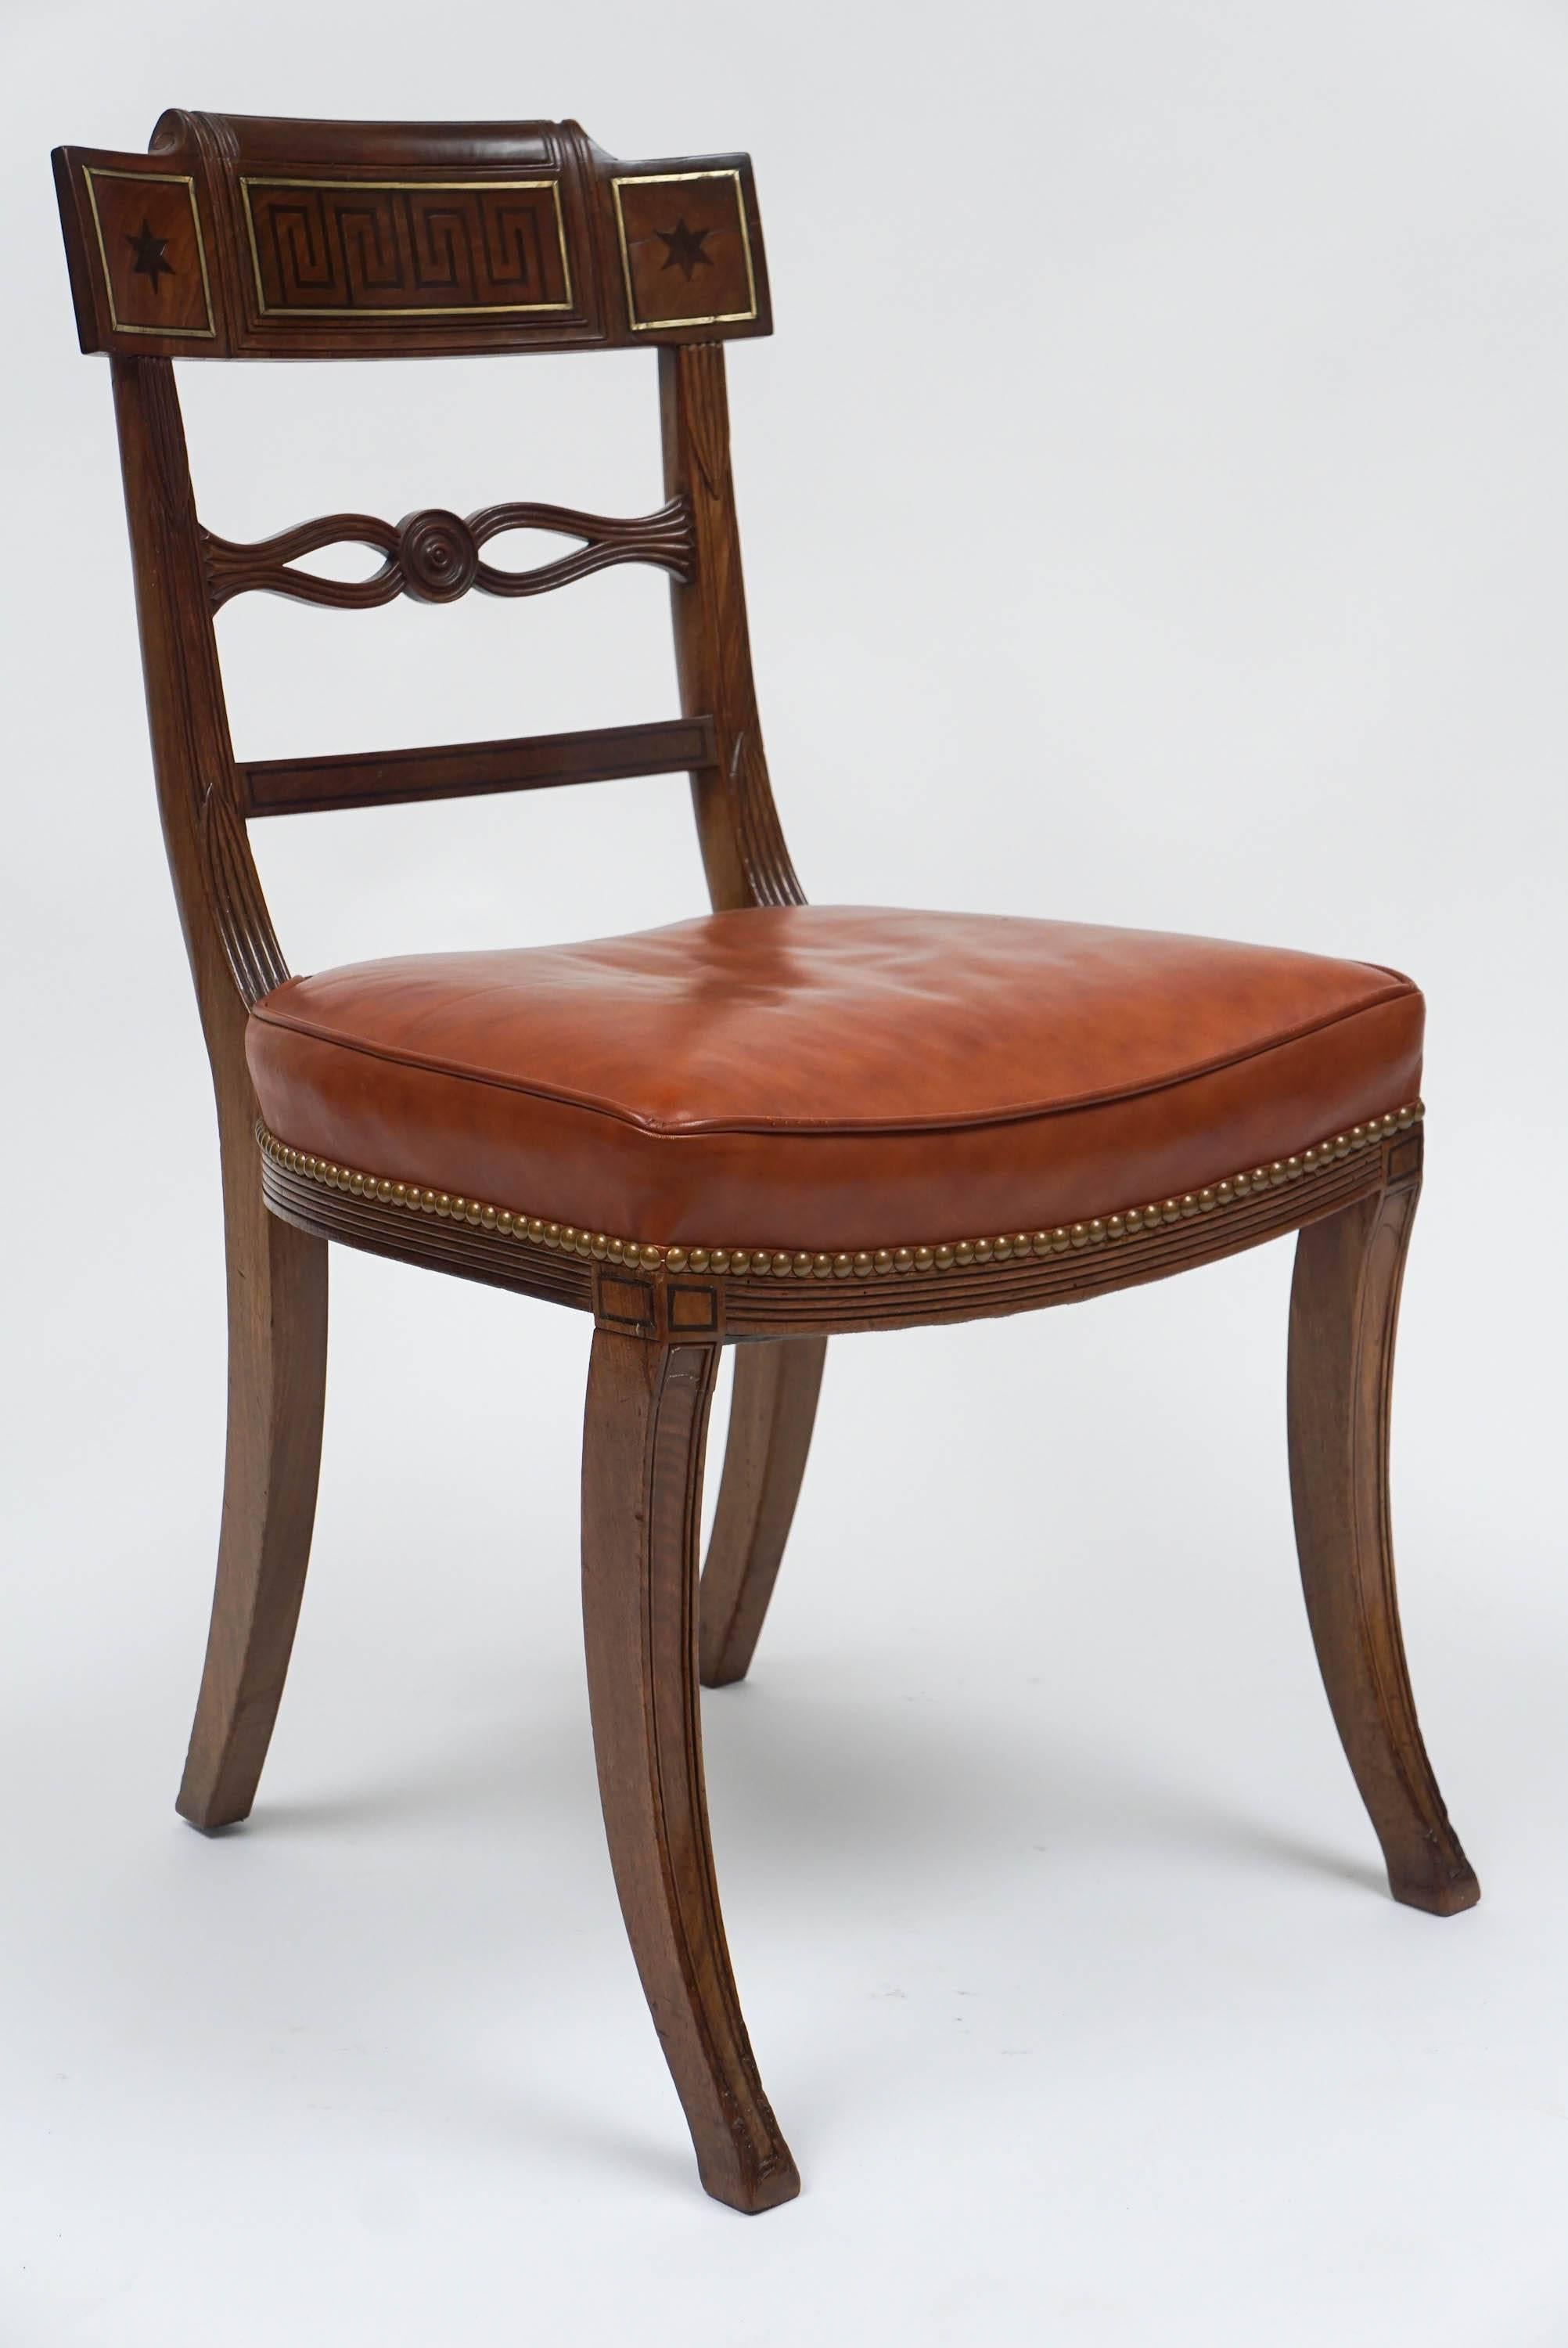 19th Century English Regency Inlaid Mahogany Klismos Dining Chairs, Set of Six, circa 1805